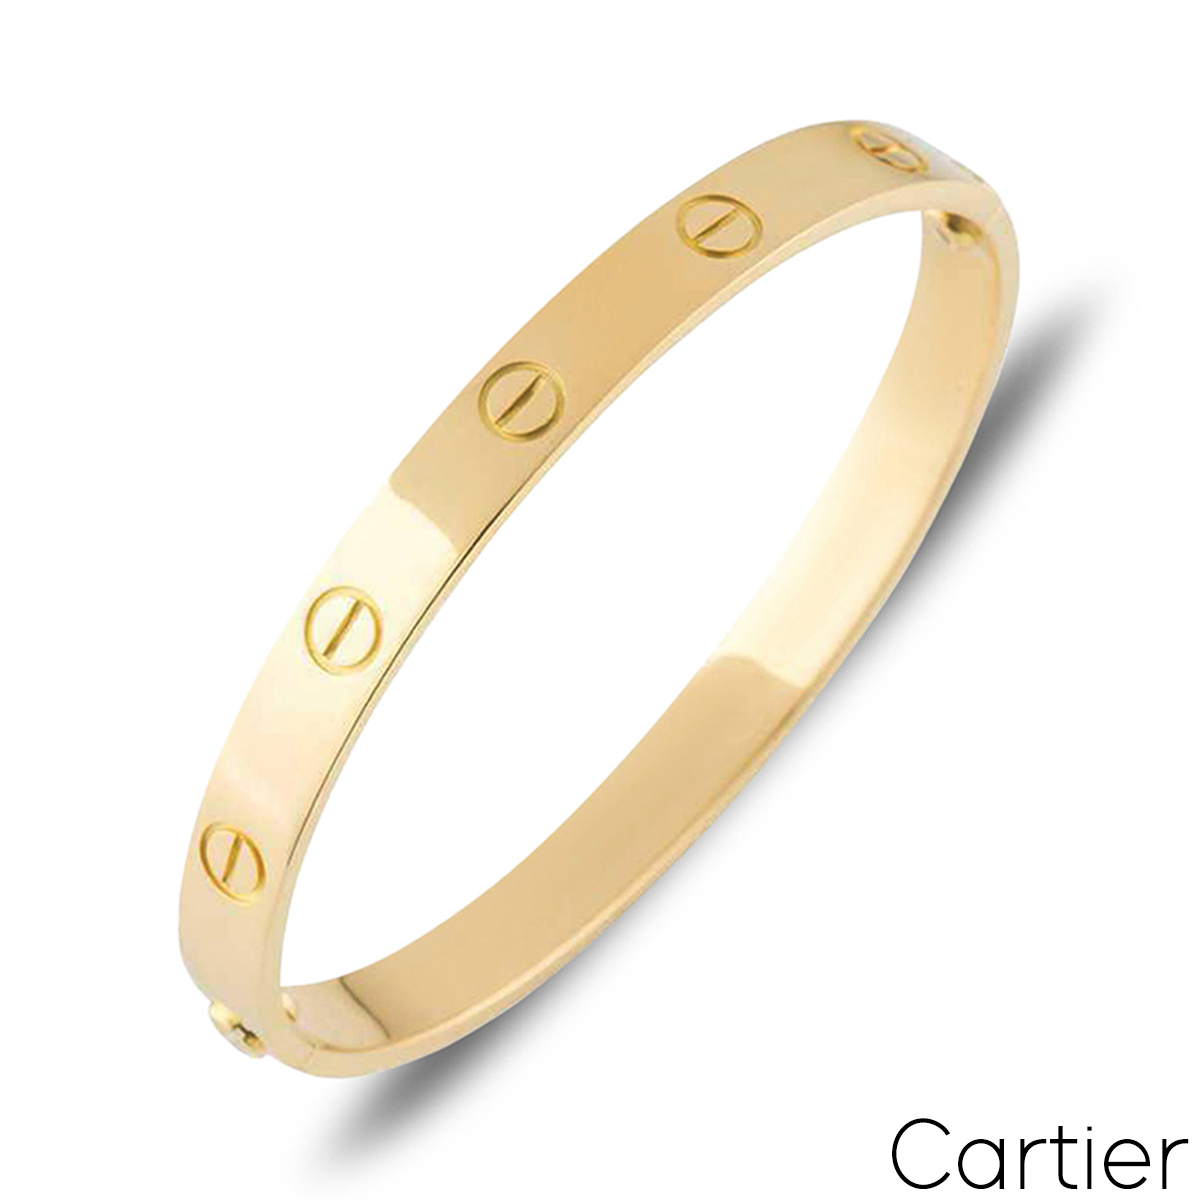 How Much Is A Cartier Bracelet?